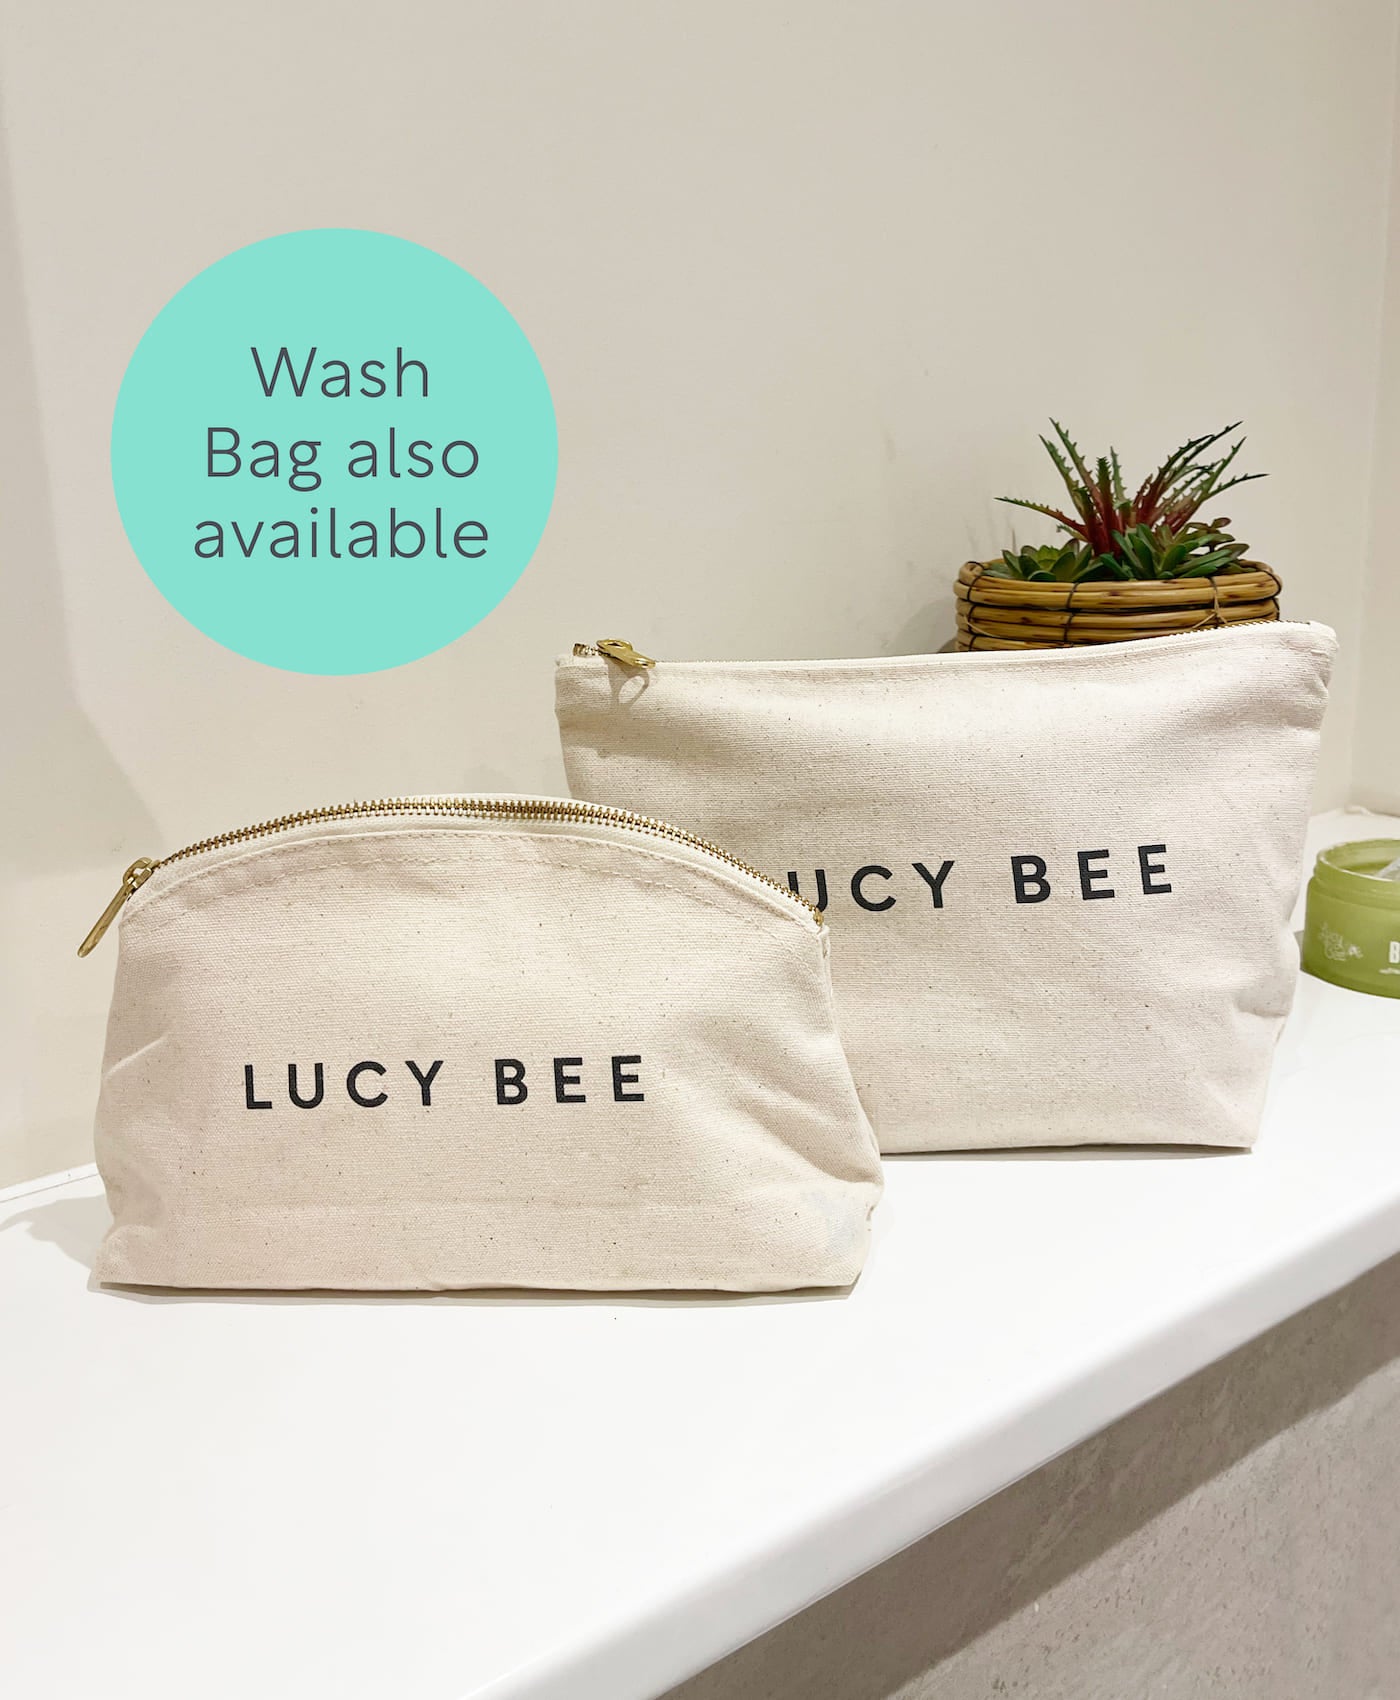 Organic Fair Trade Cotton Beauty Bag